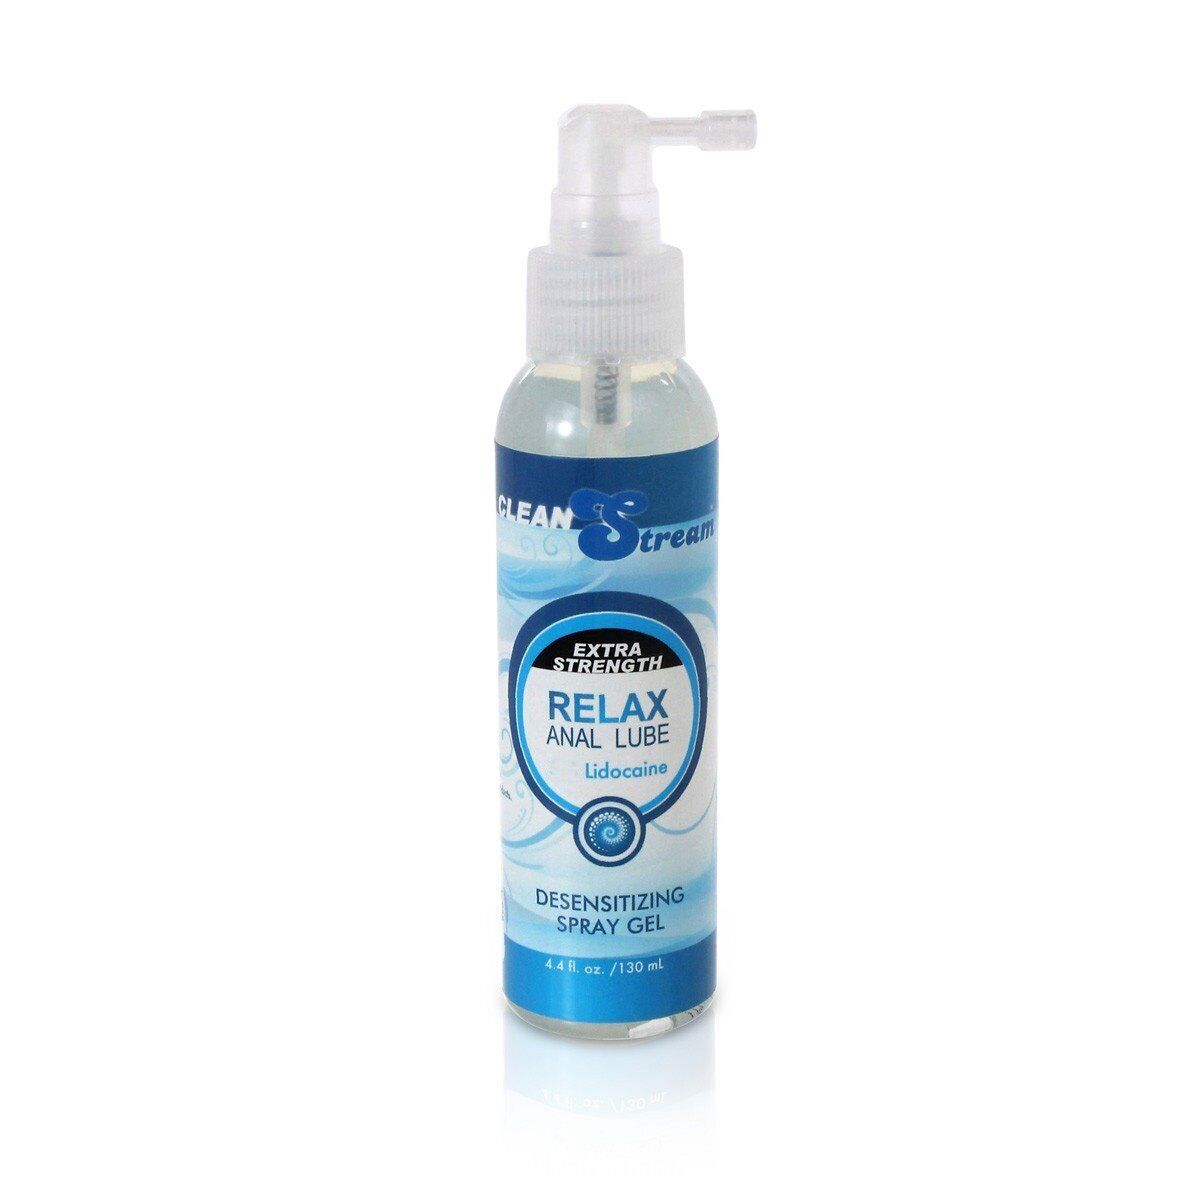 Cleanstream Extra Strength Relax Anal Lube Desensitizing Spray Gel